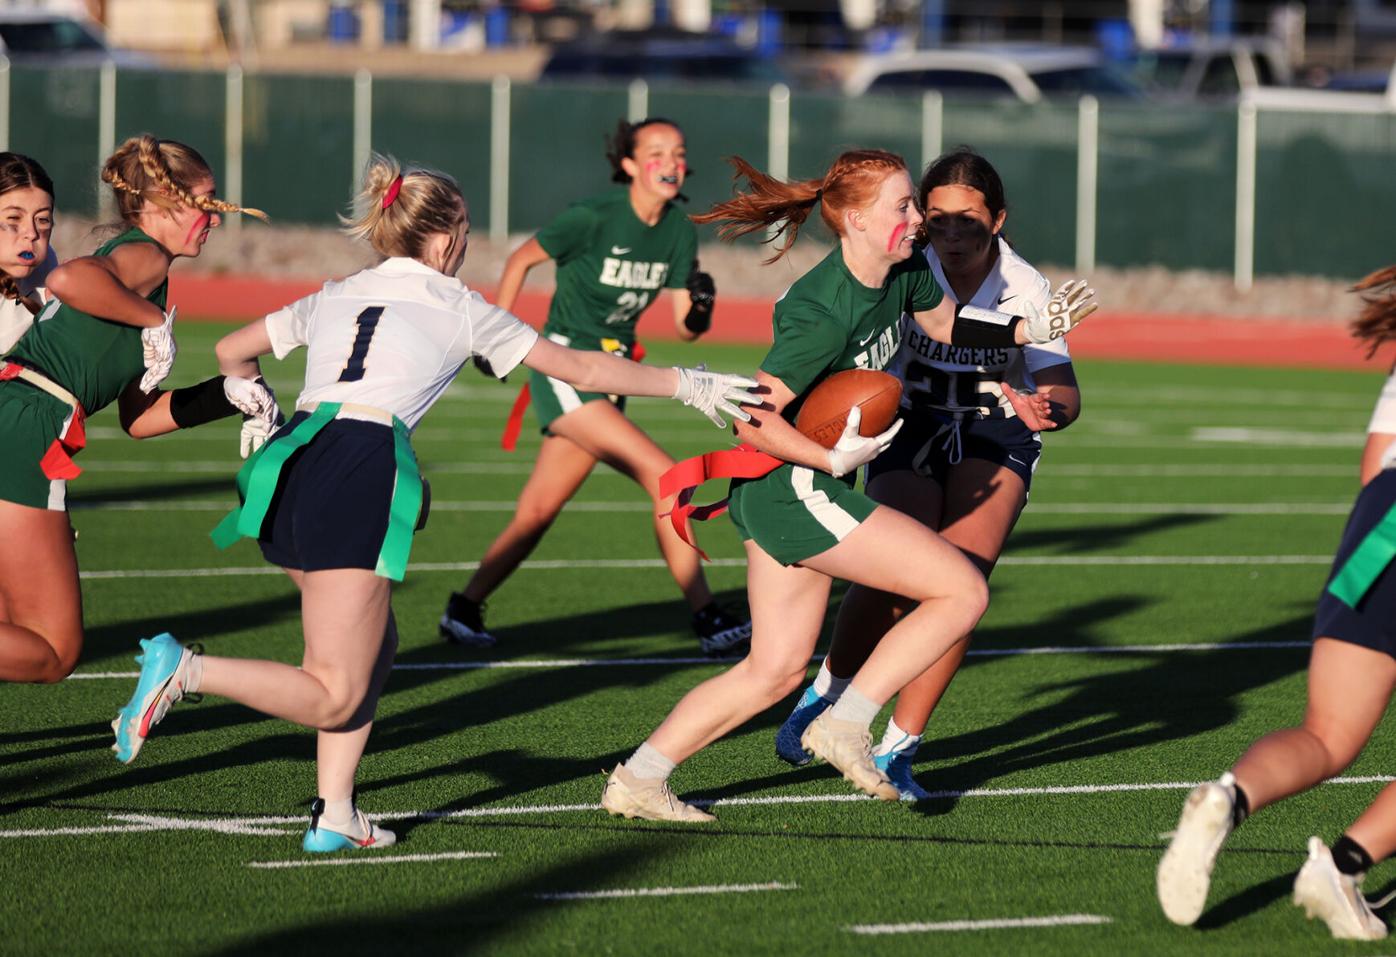 Arizona's high school girls flag football scores big in inaugural season